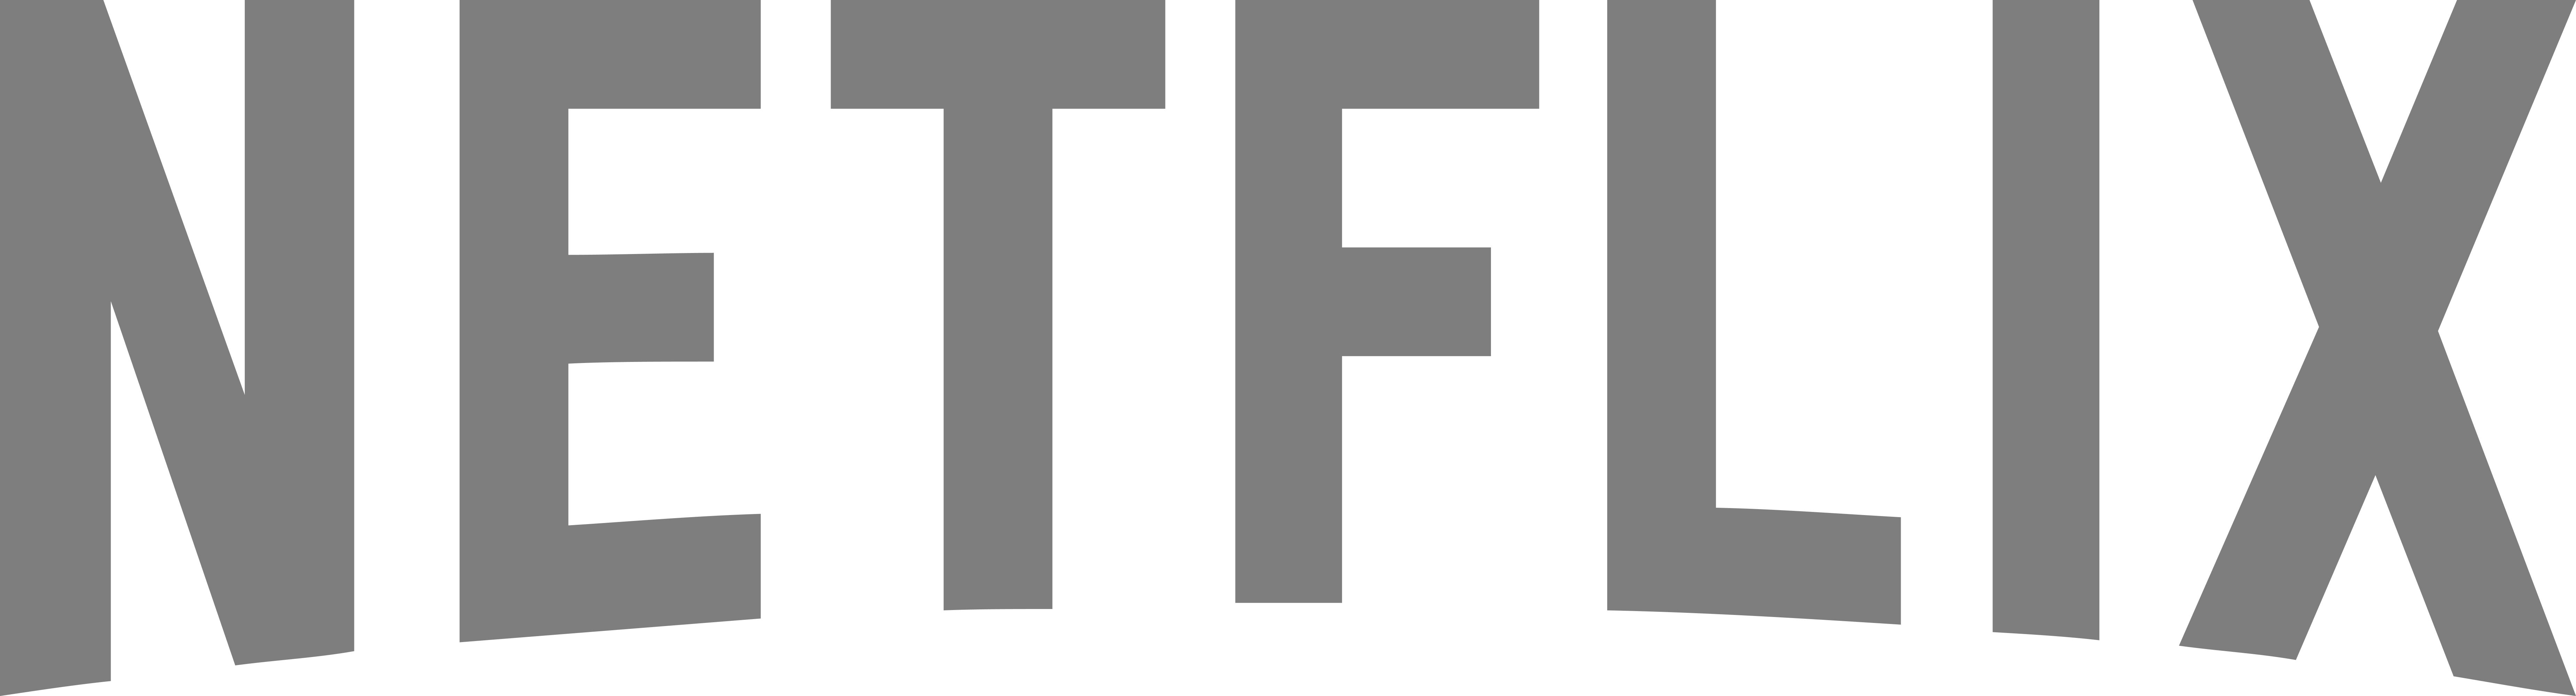 netflix logo gray color